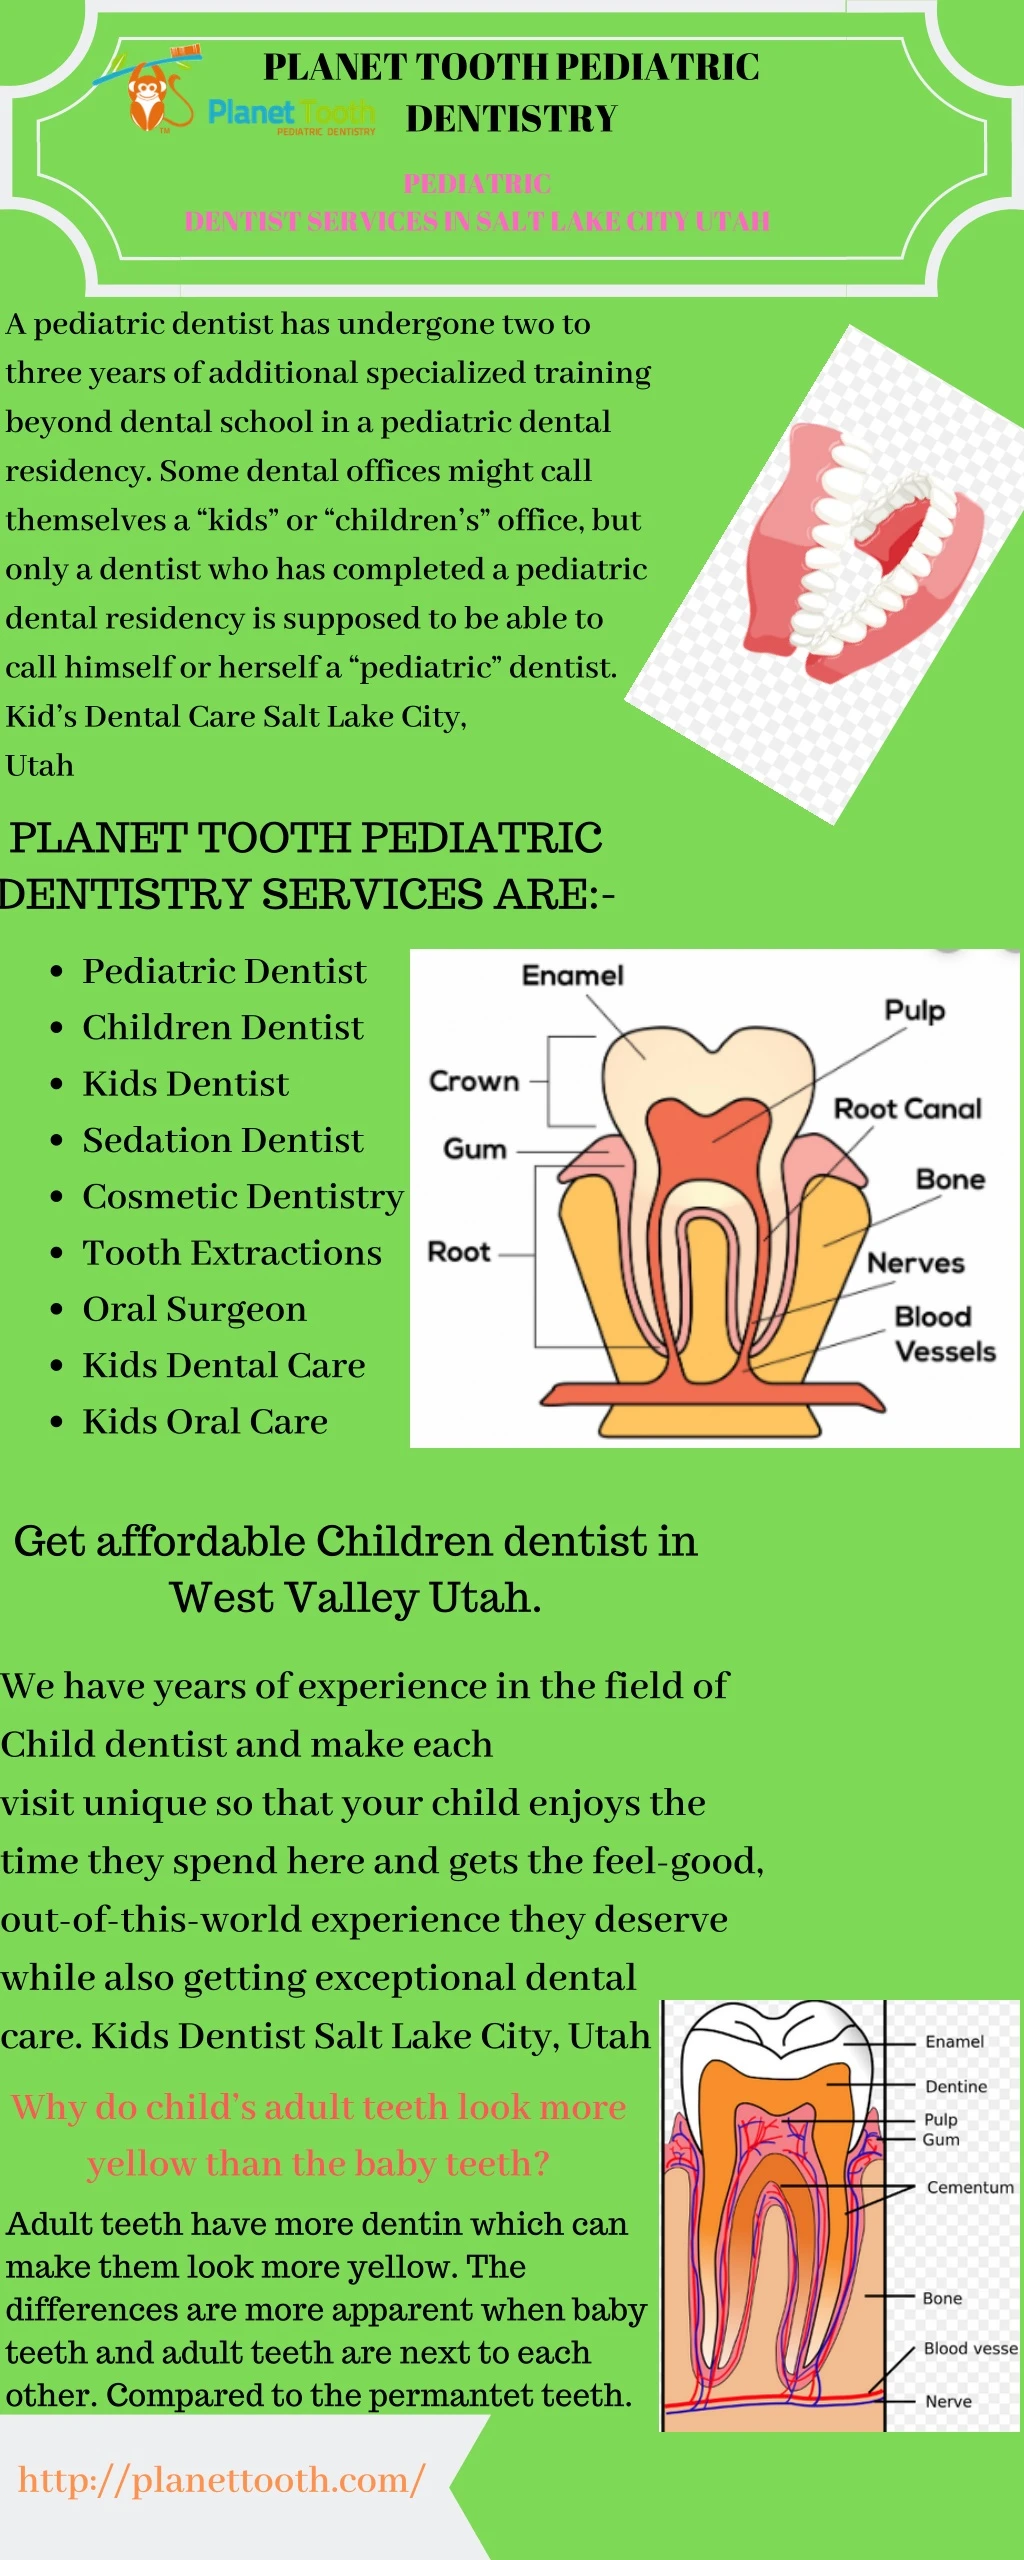 planet tooth pediatric dentistry